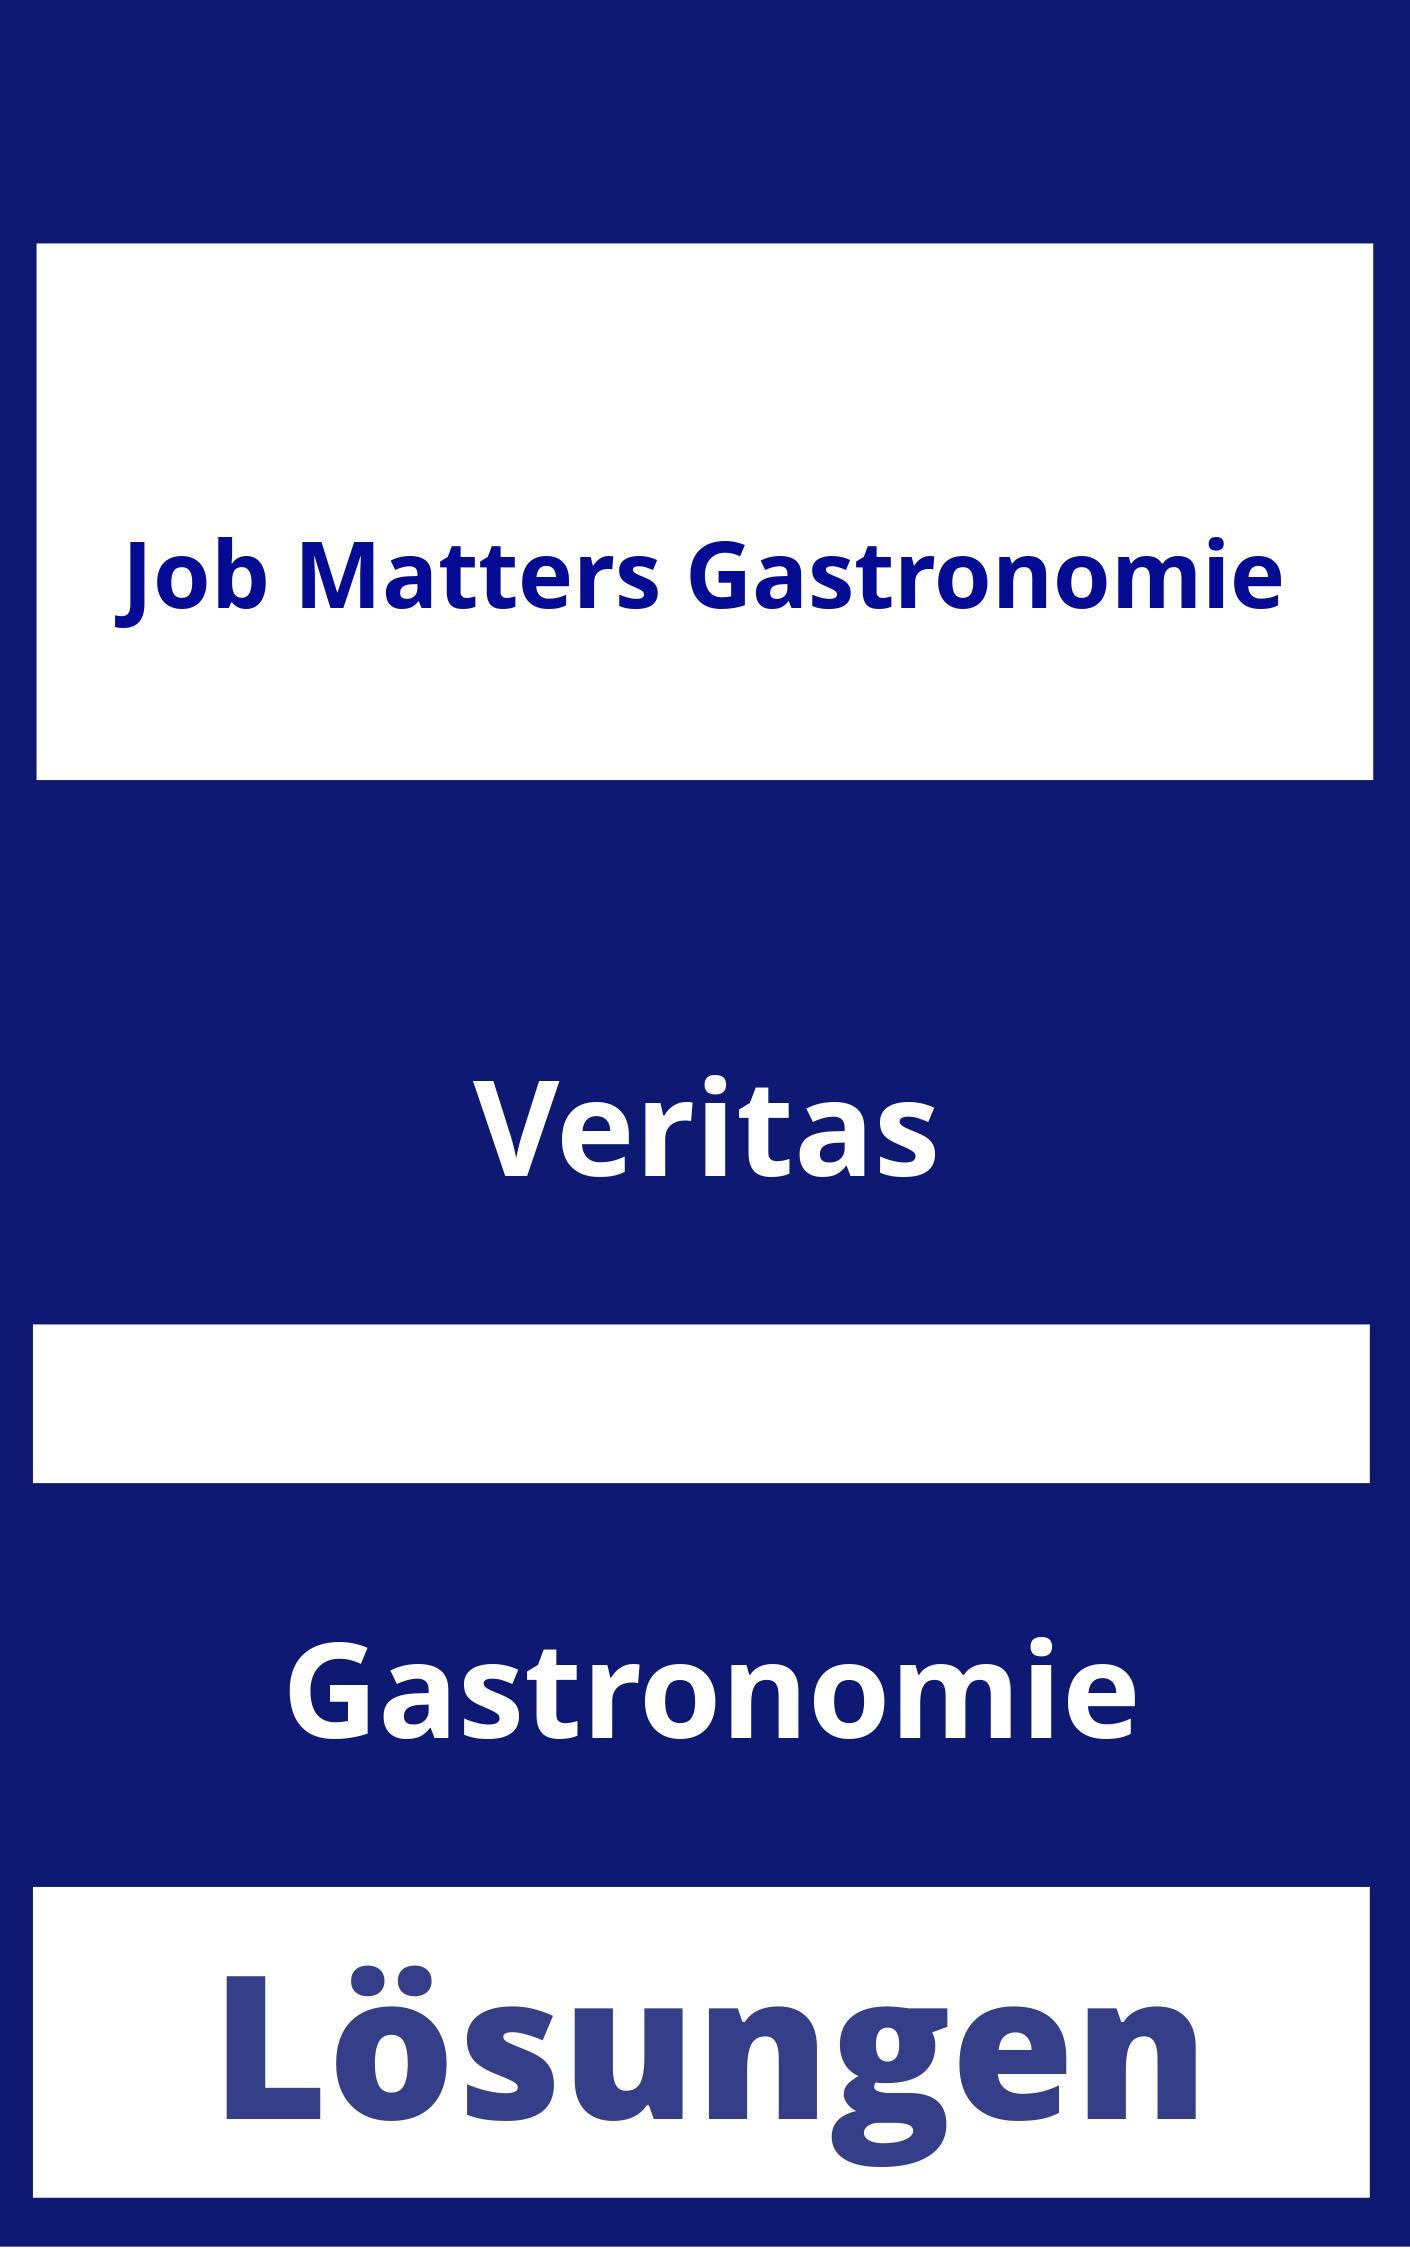 Job Matters Gastronomie